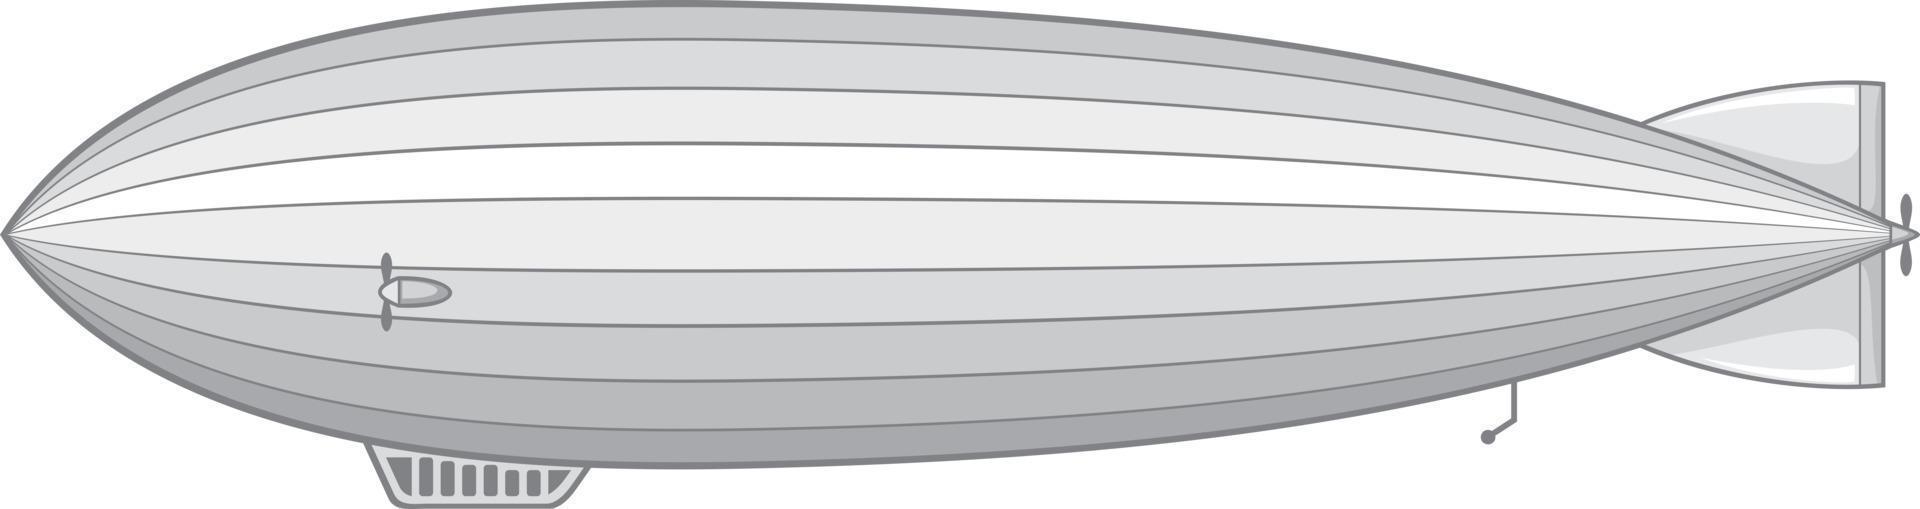 fliegendes Zeppelin-Symbol vektor